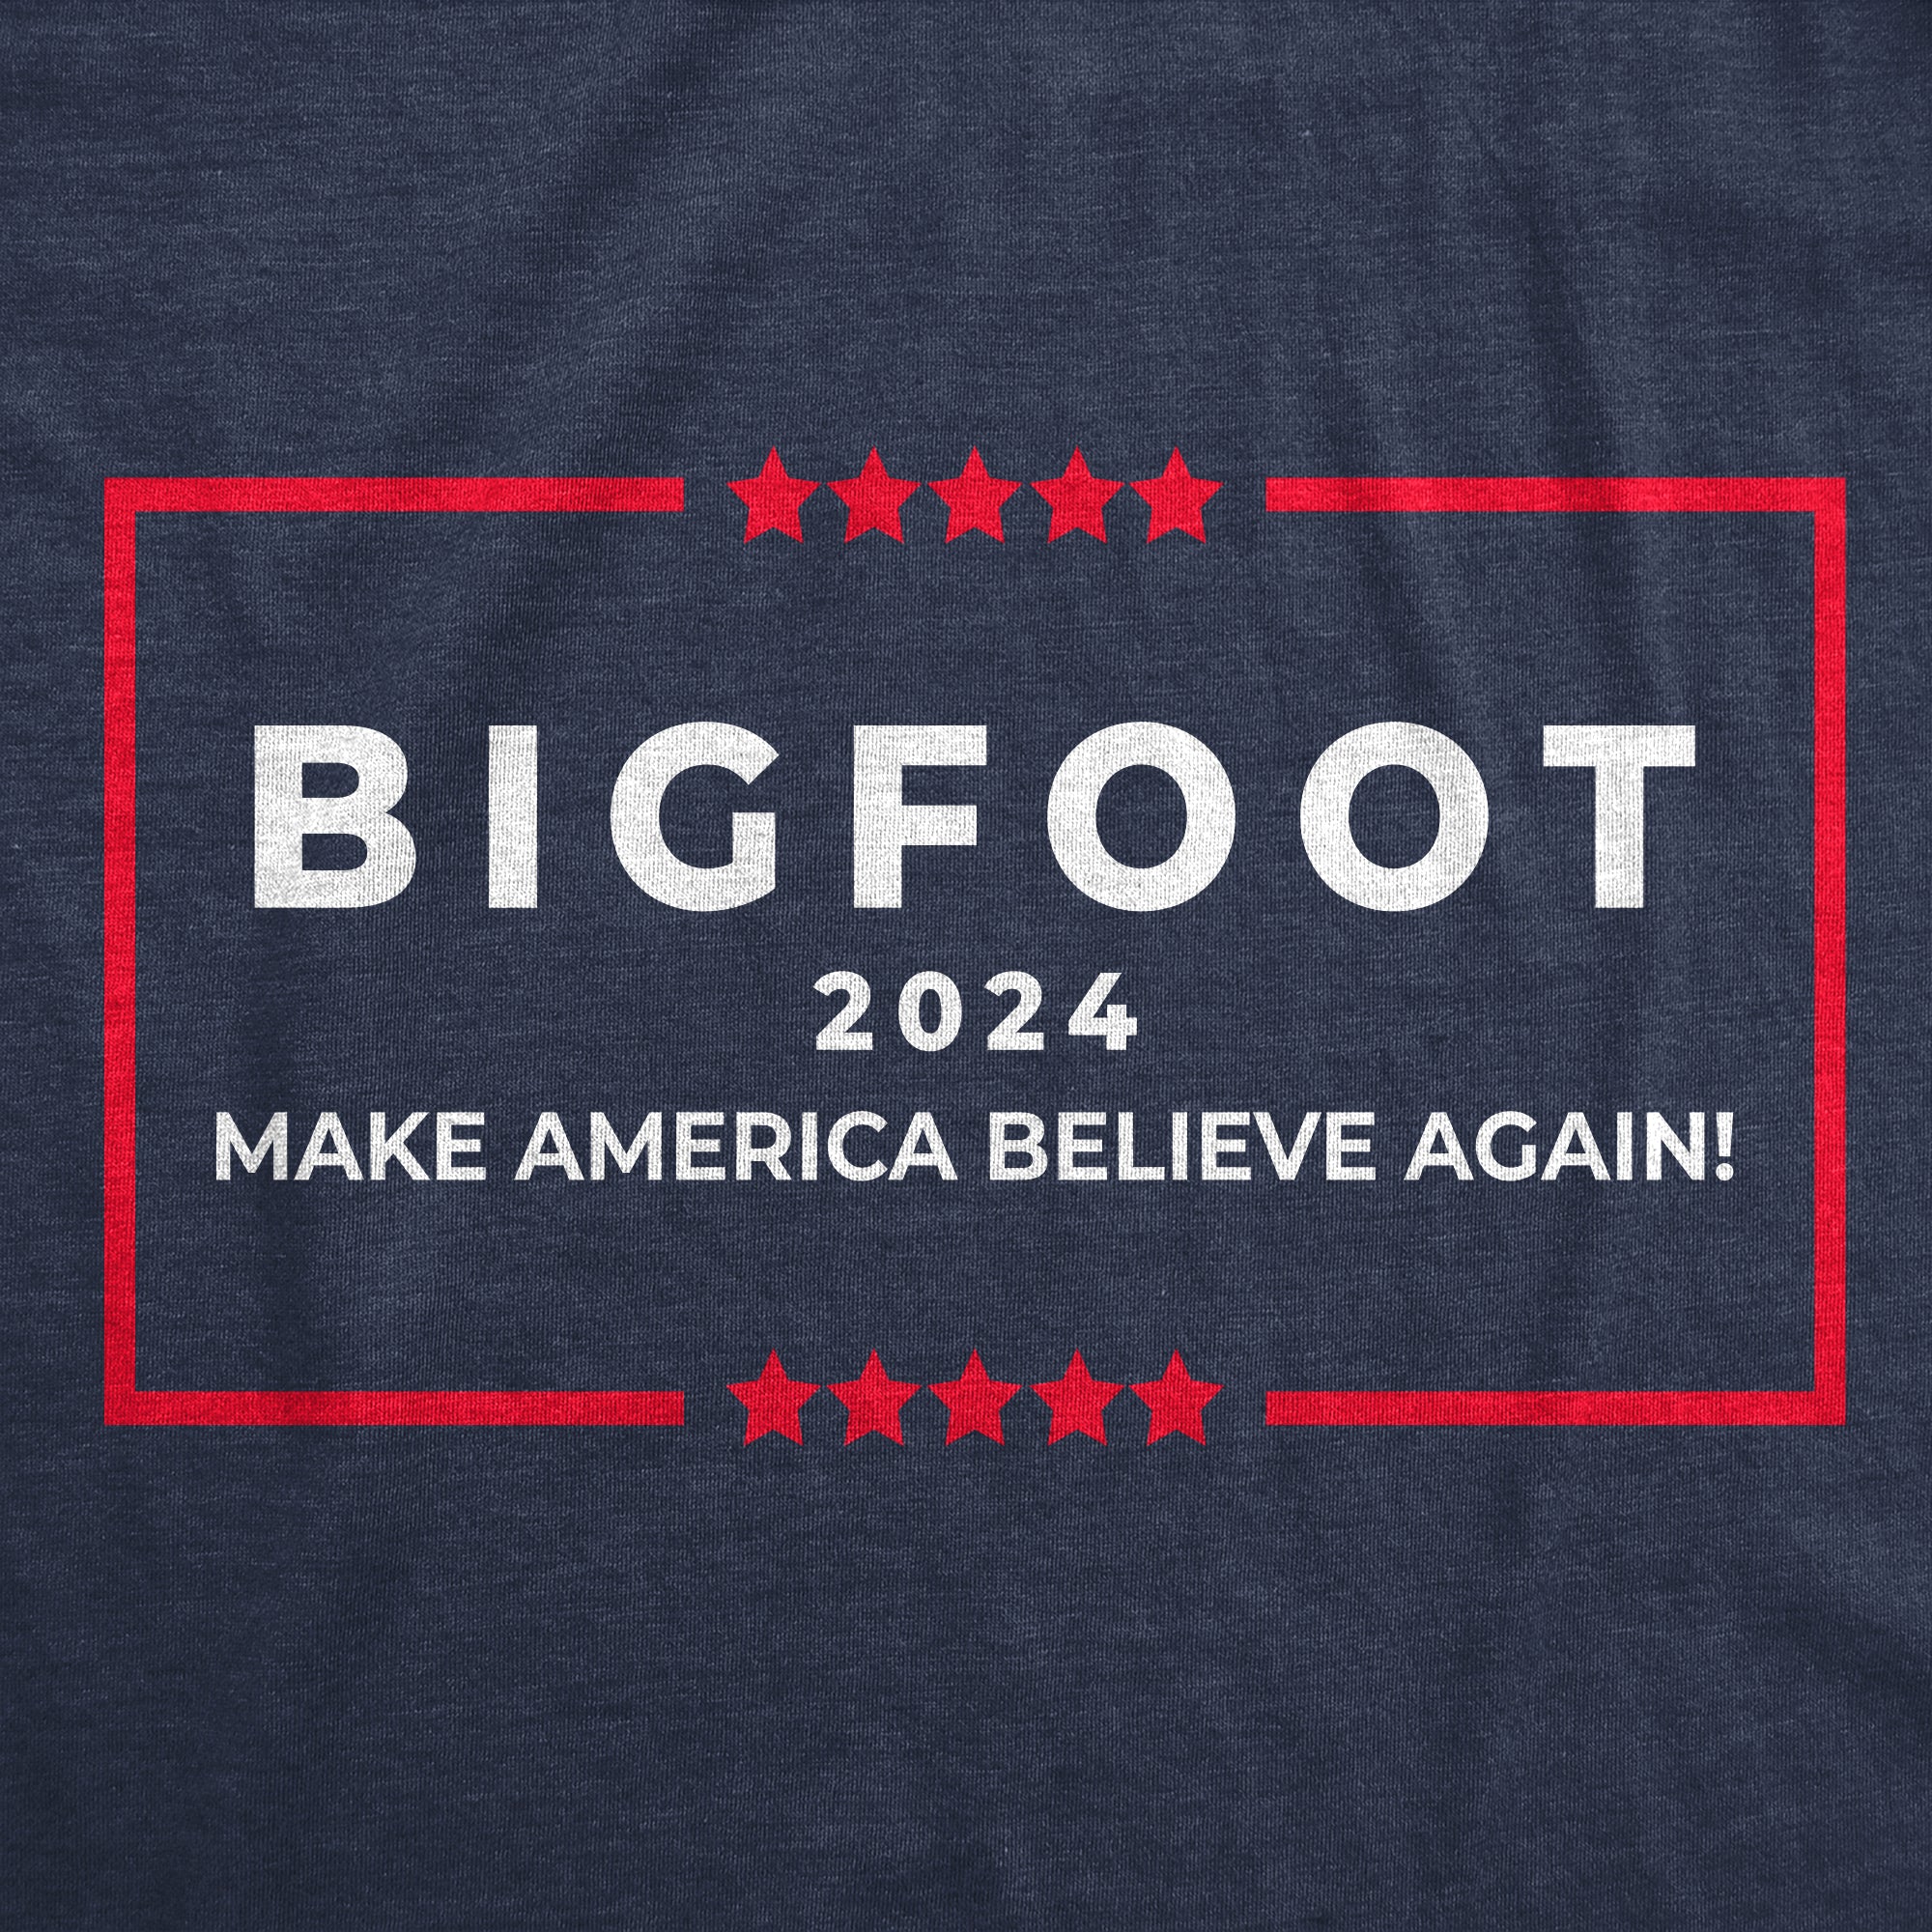 Funny Heather Navy - Bigfoot 2024 Bigfoot 2024 Womens T Shirt Nerdy sarcastic Political Tee